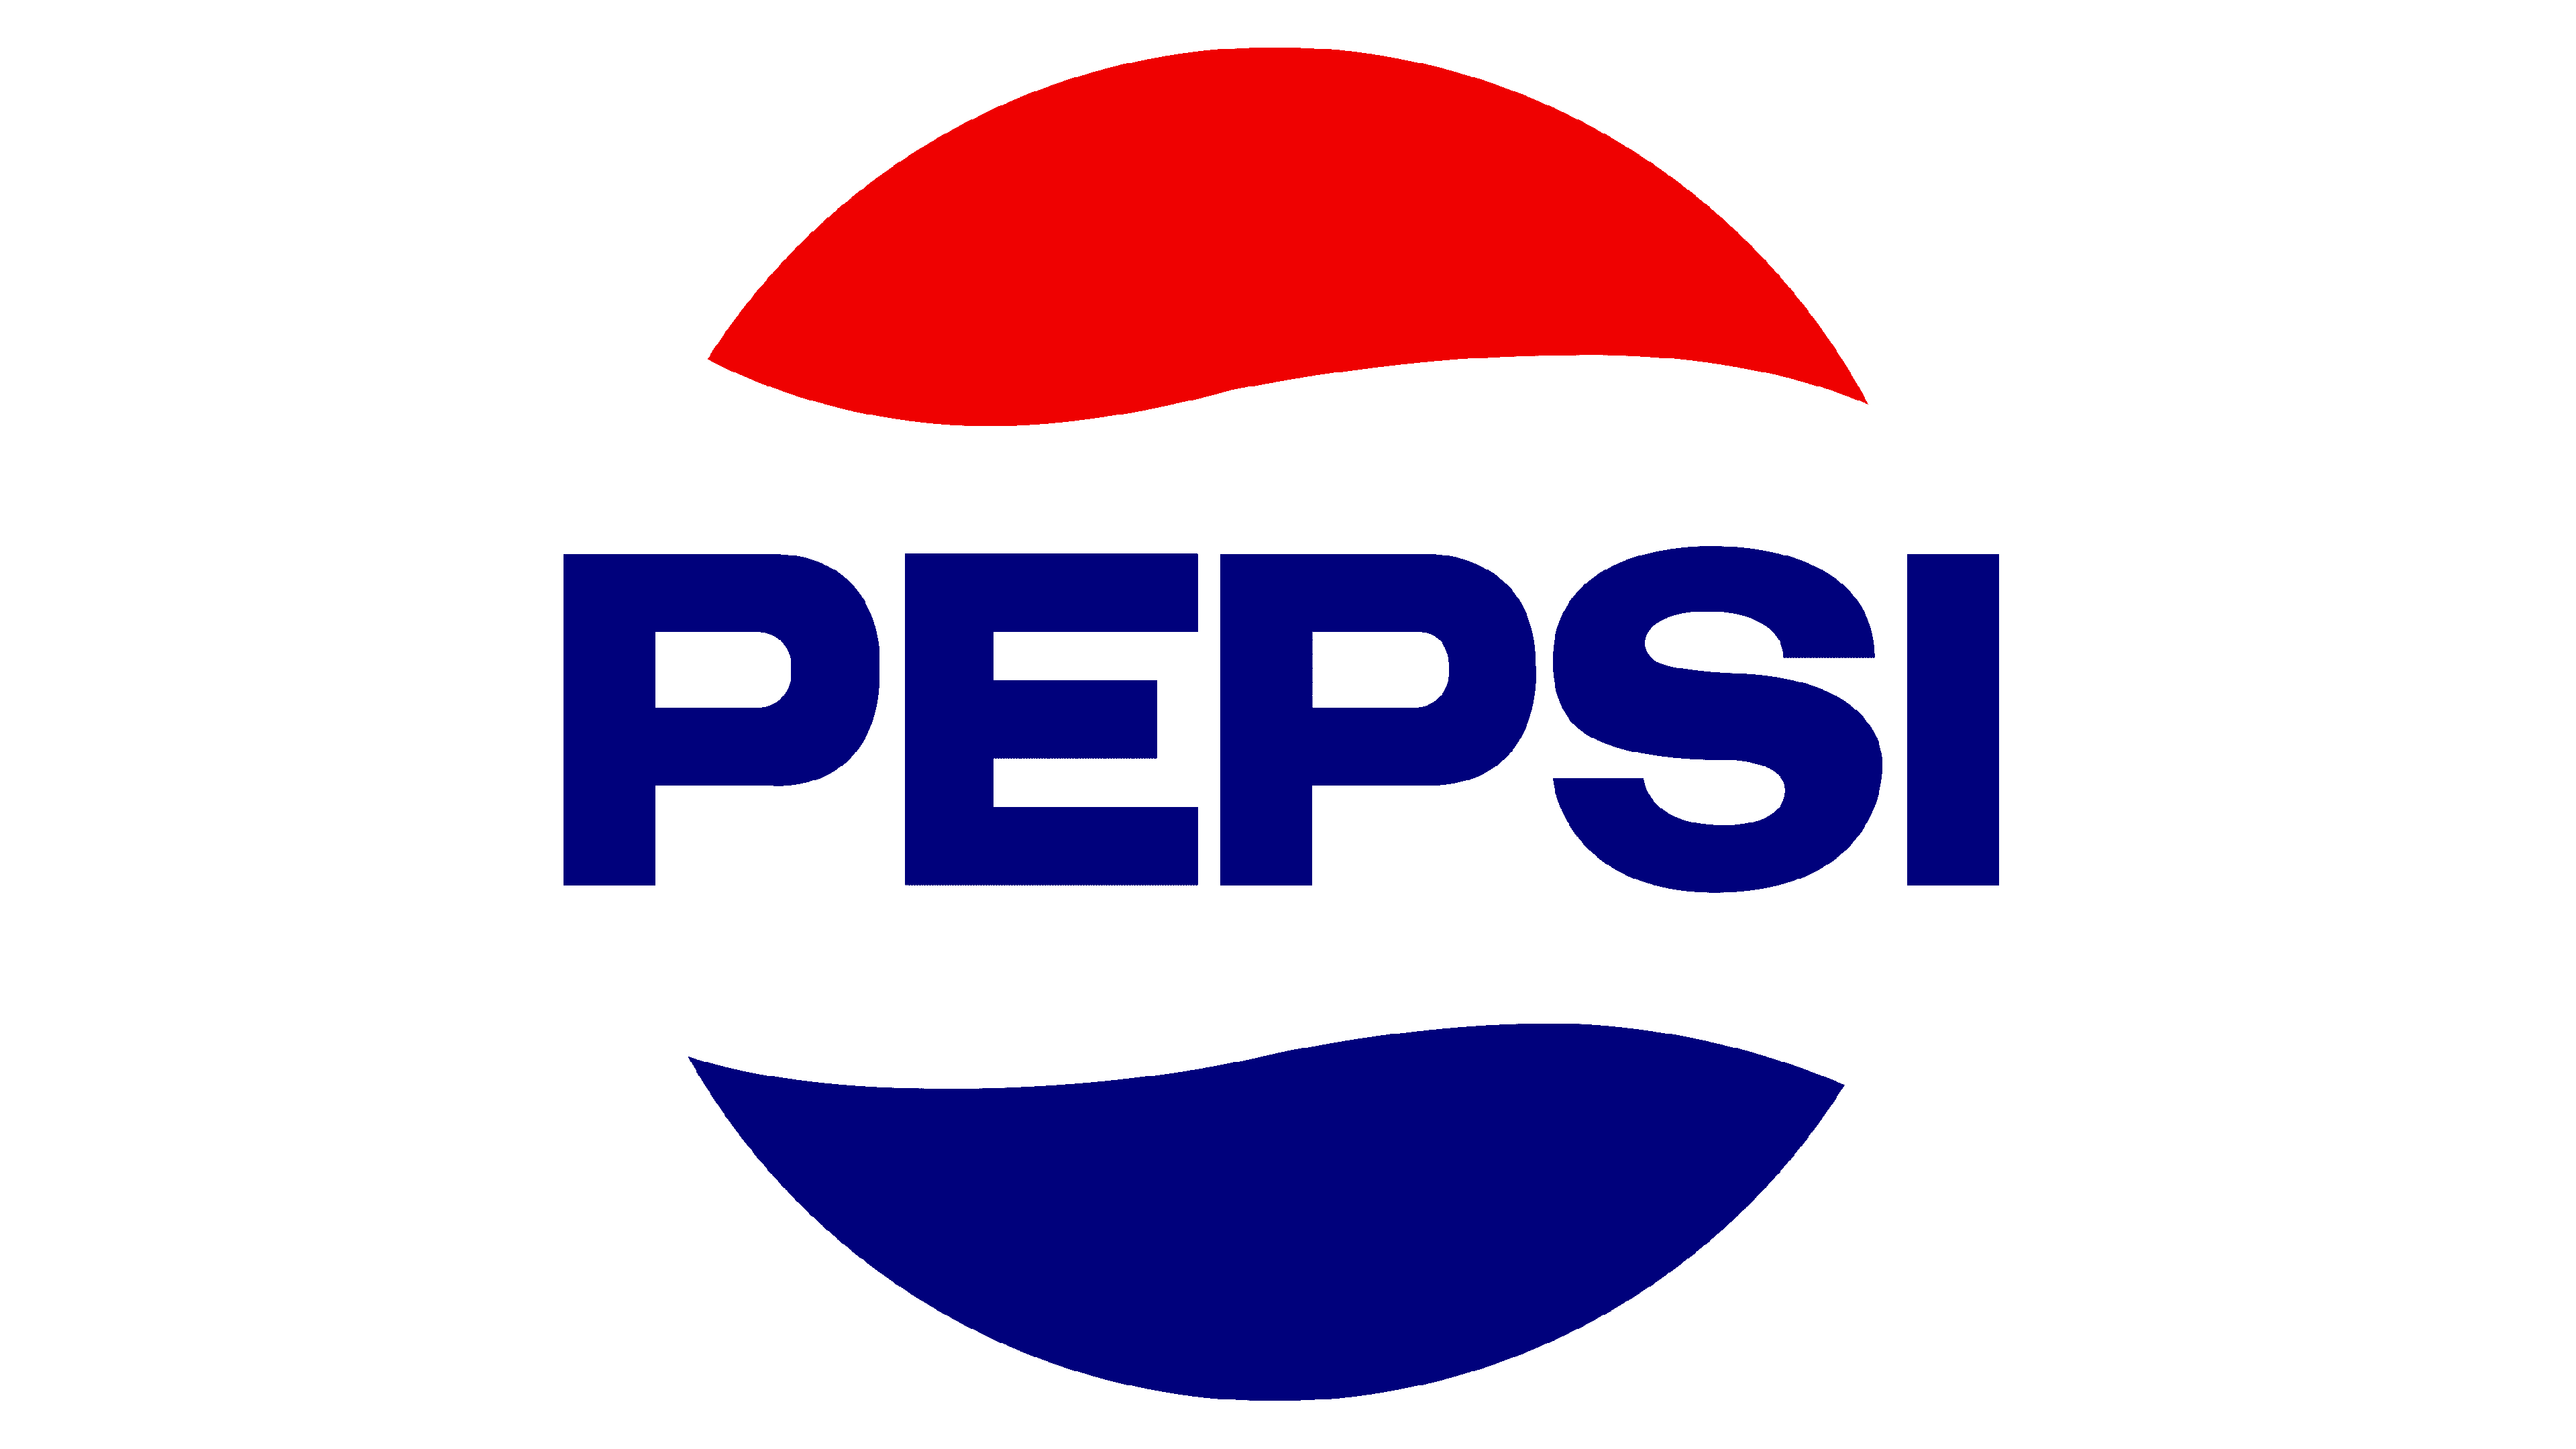 100+] Pepsi Logo Png Images | Wallpapers.com